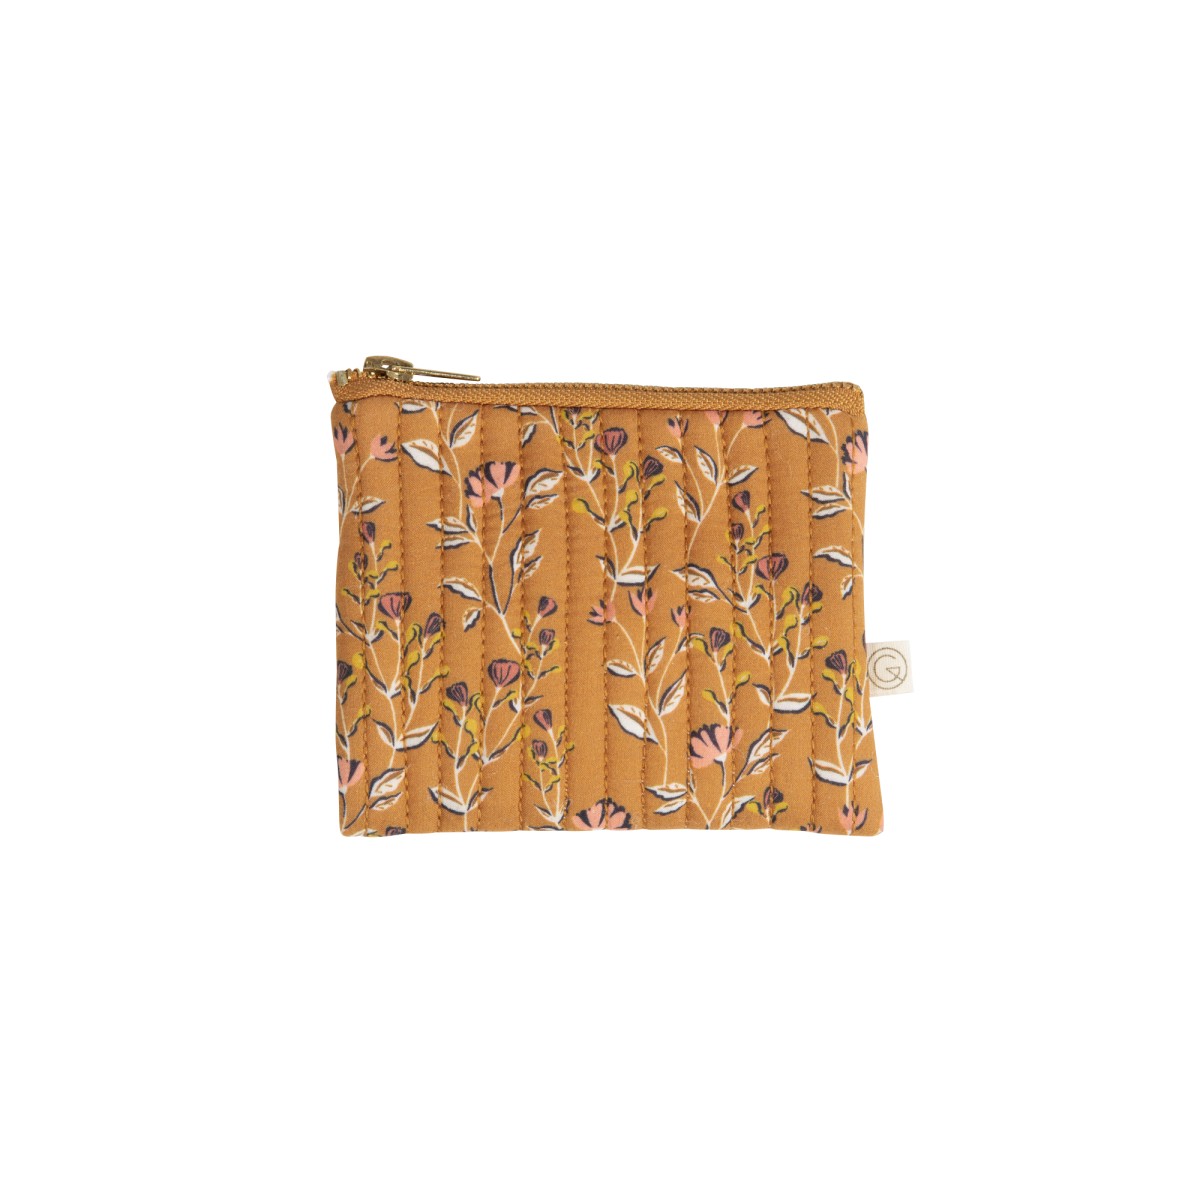 Porte-monnaie en coton imprimé fleuri marron